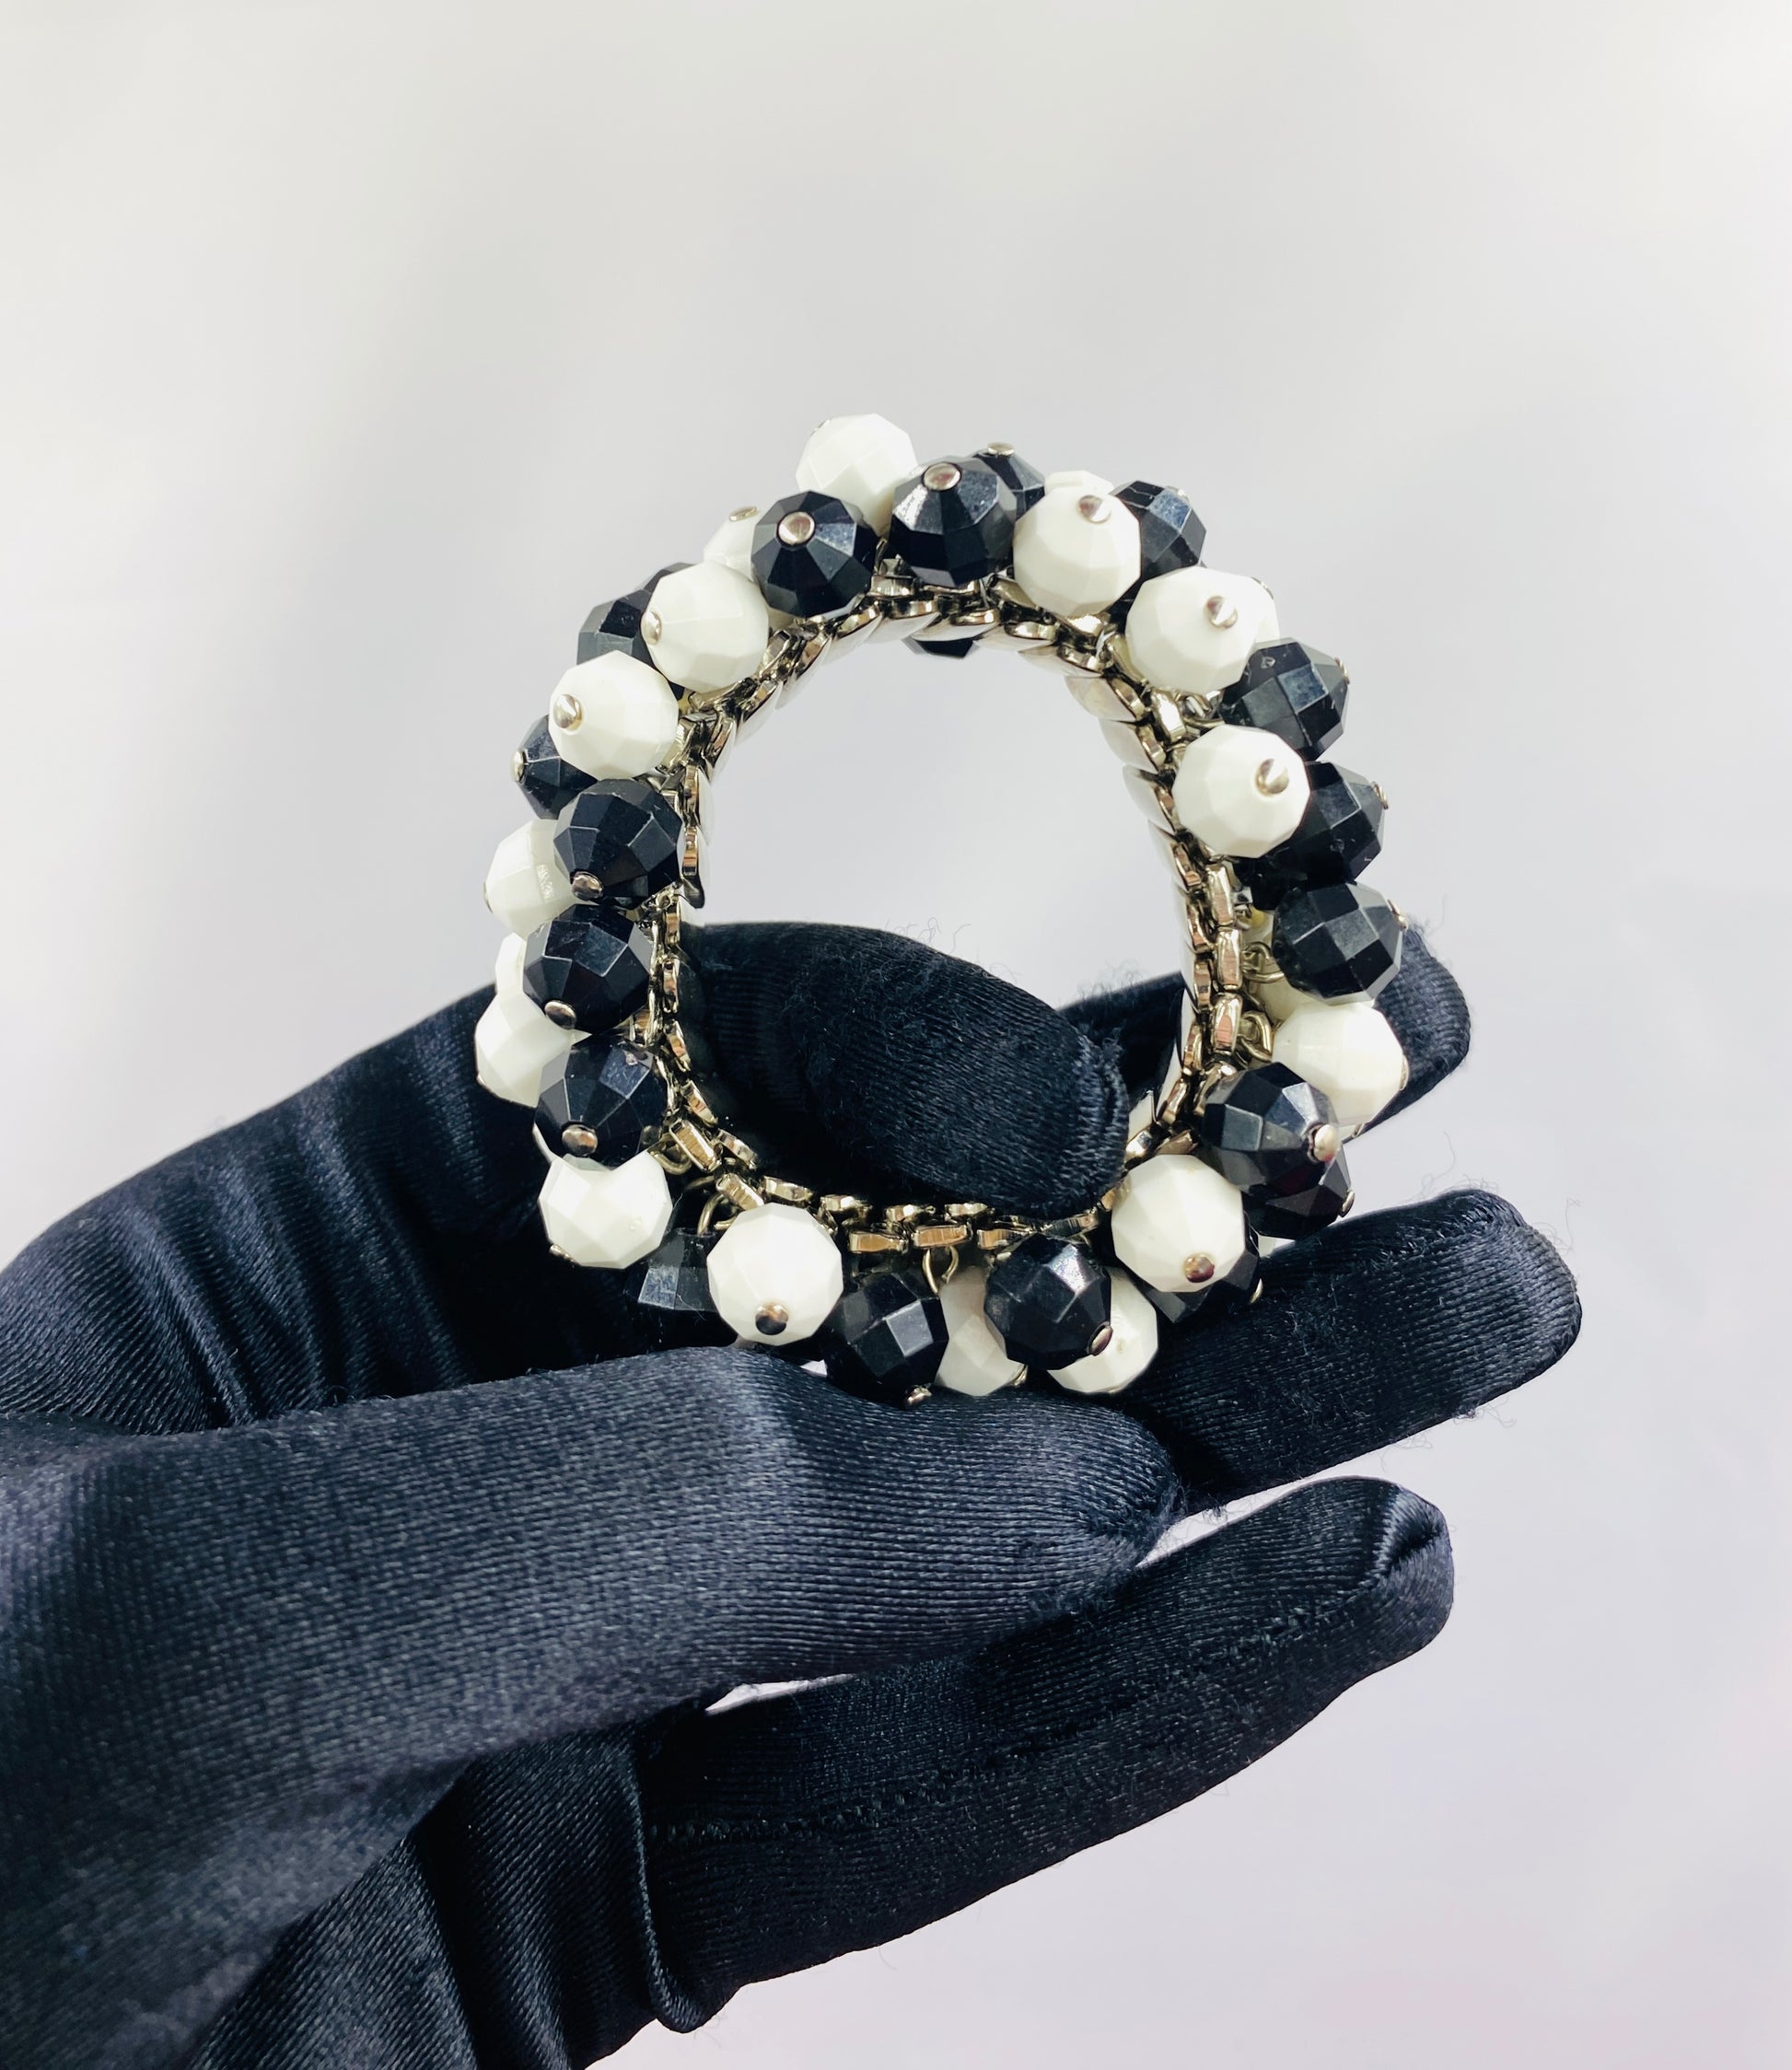 Vintage 1950s Black & White Glass Bead Cha Cha Expansion Bracelet